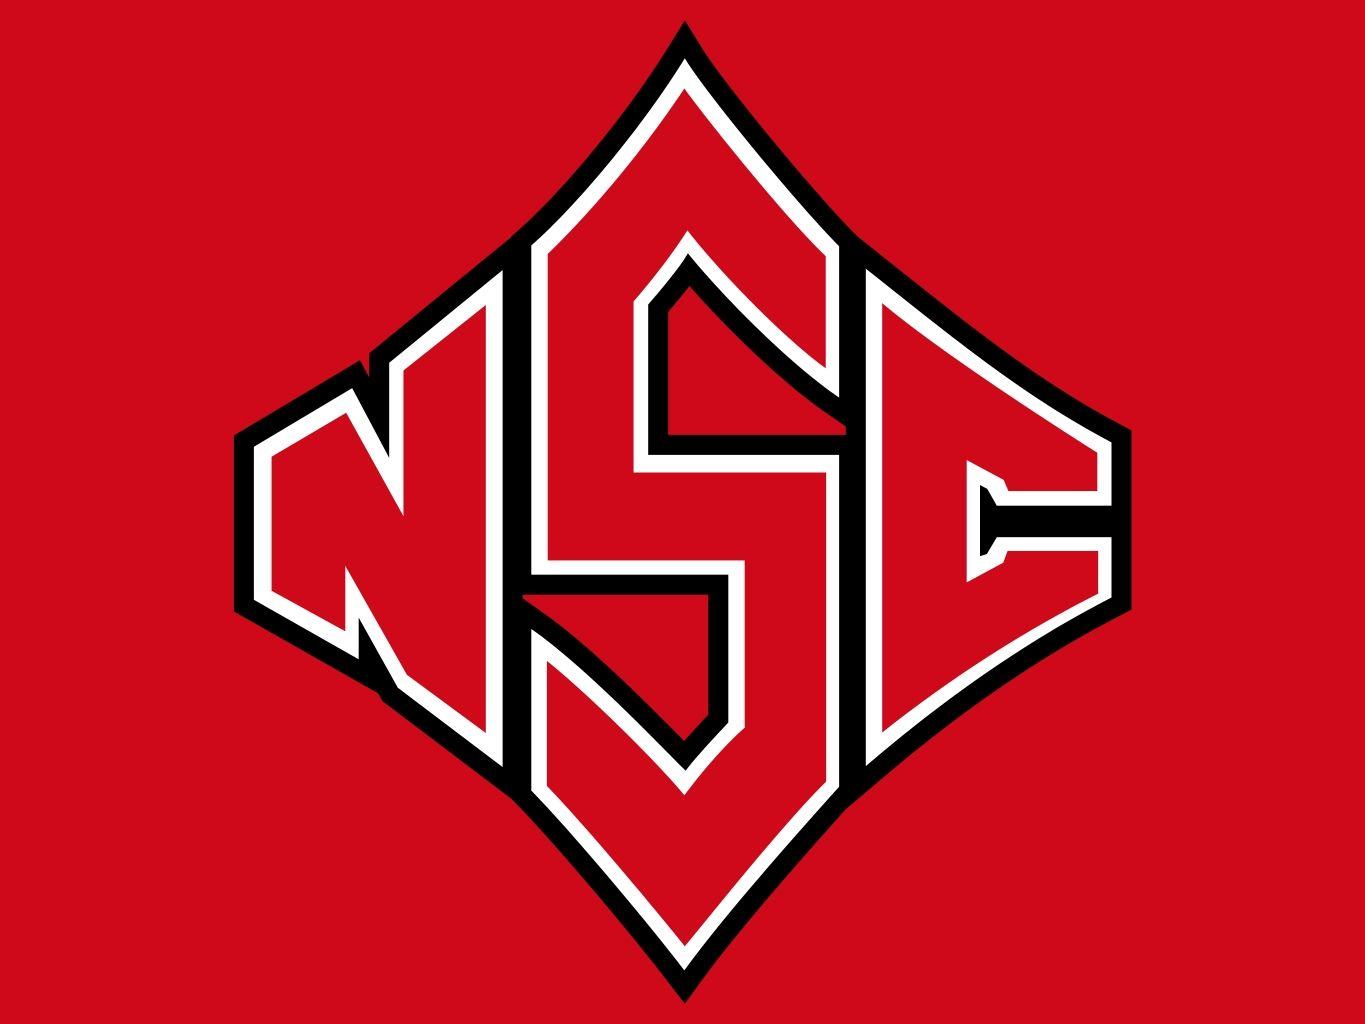 NC State Wolfpack Logo - North Carolina State Wolfpack. Logan's cooler. Nc state university